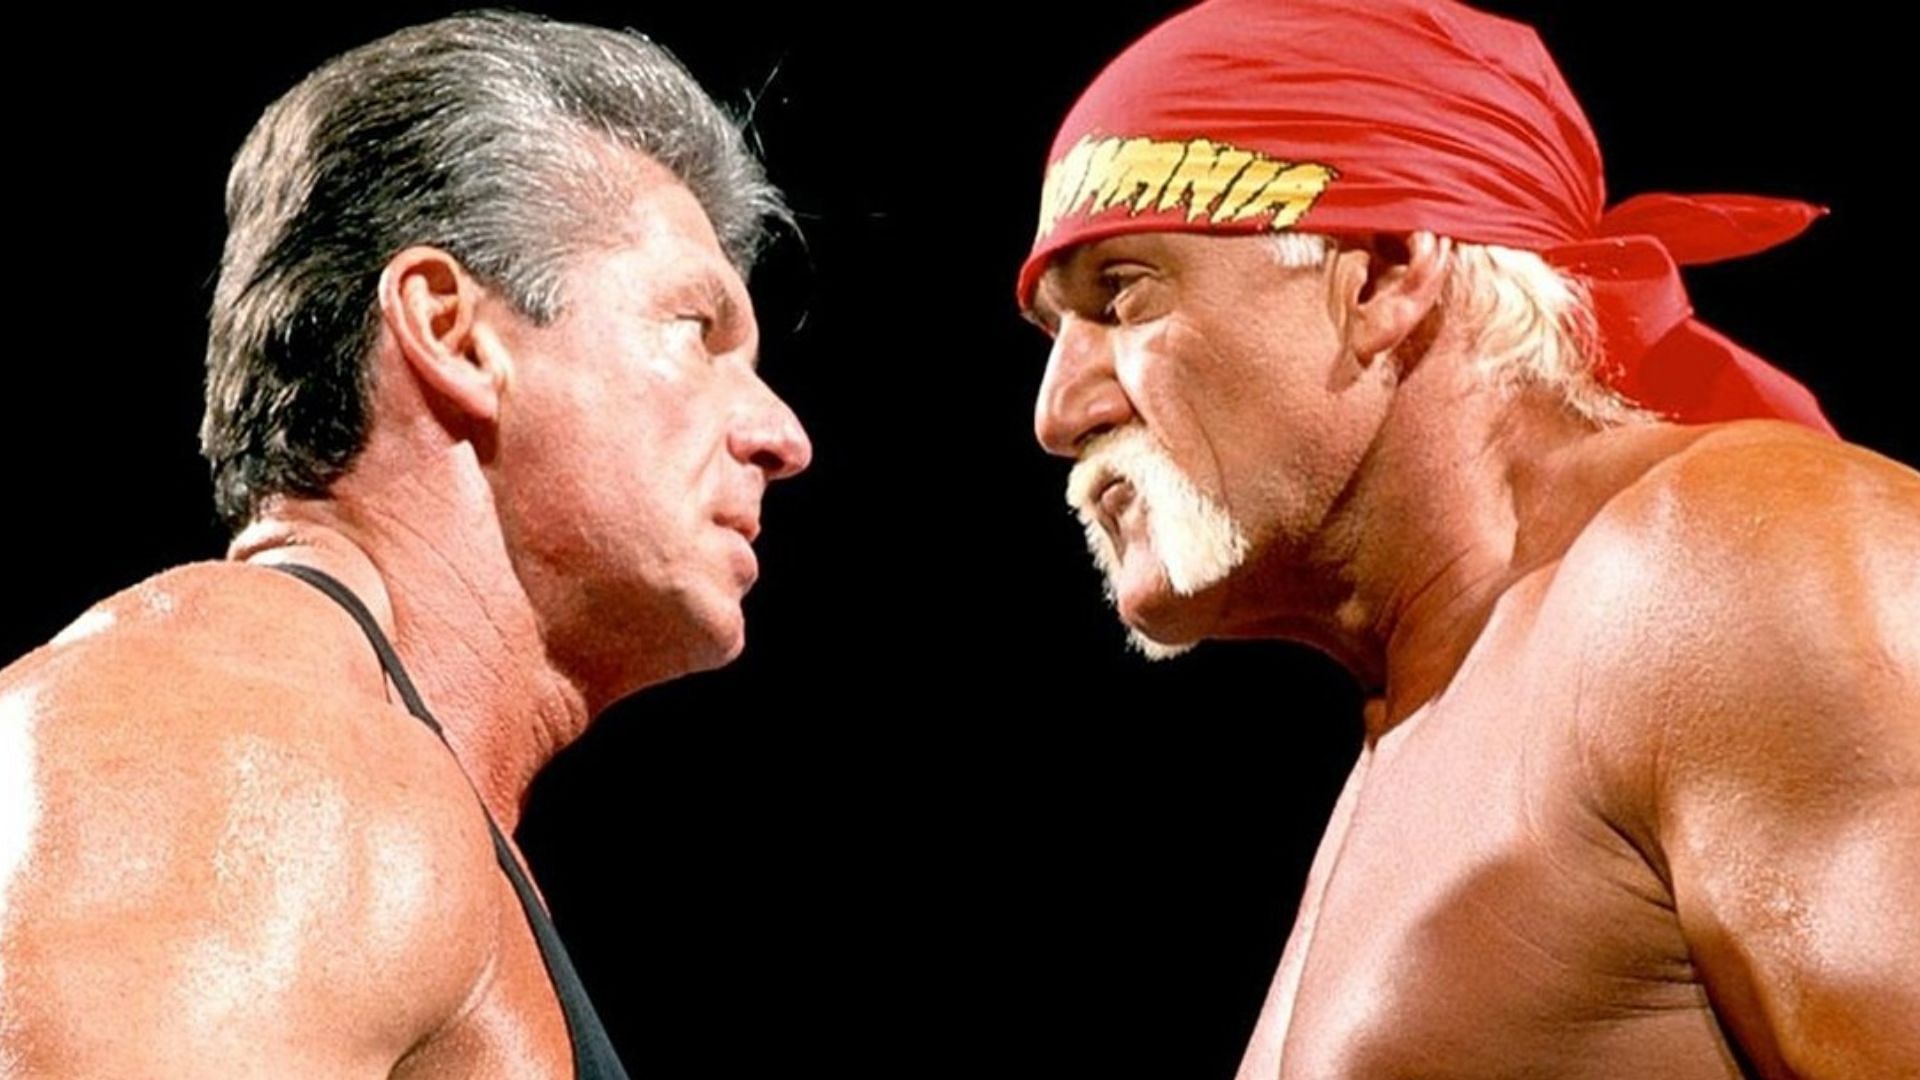 Vince McMahon (left) and Hulk Hogan (right)